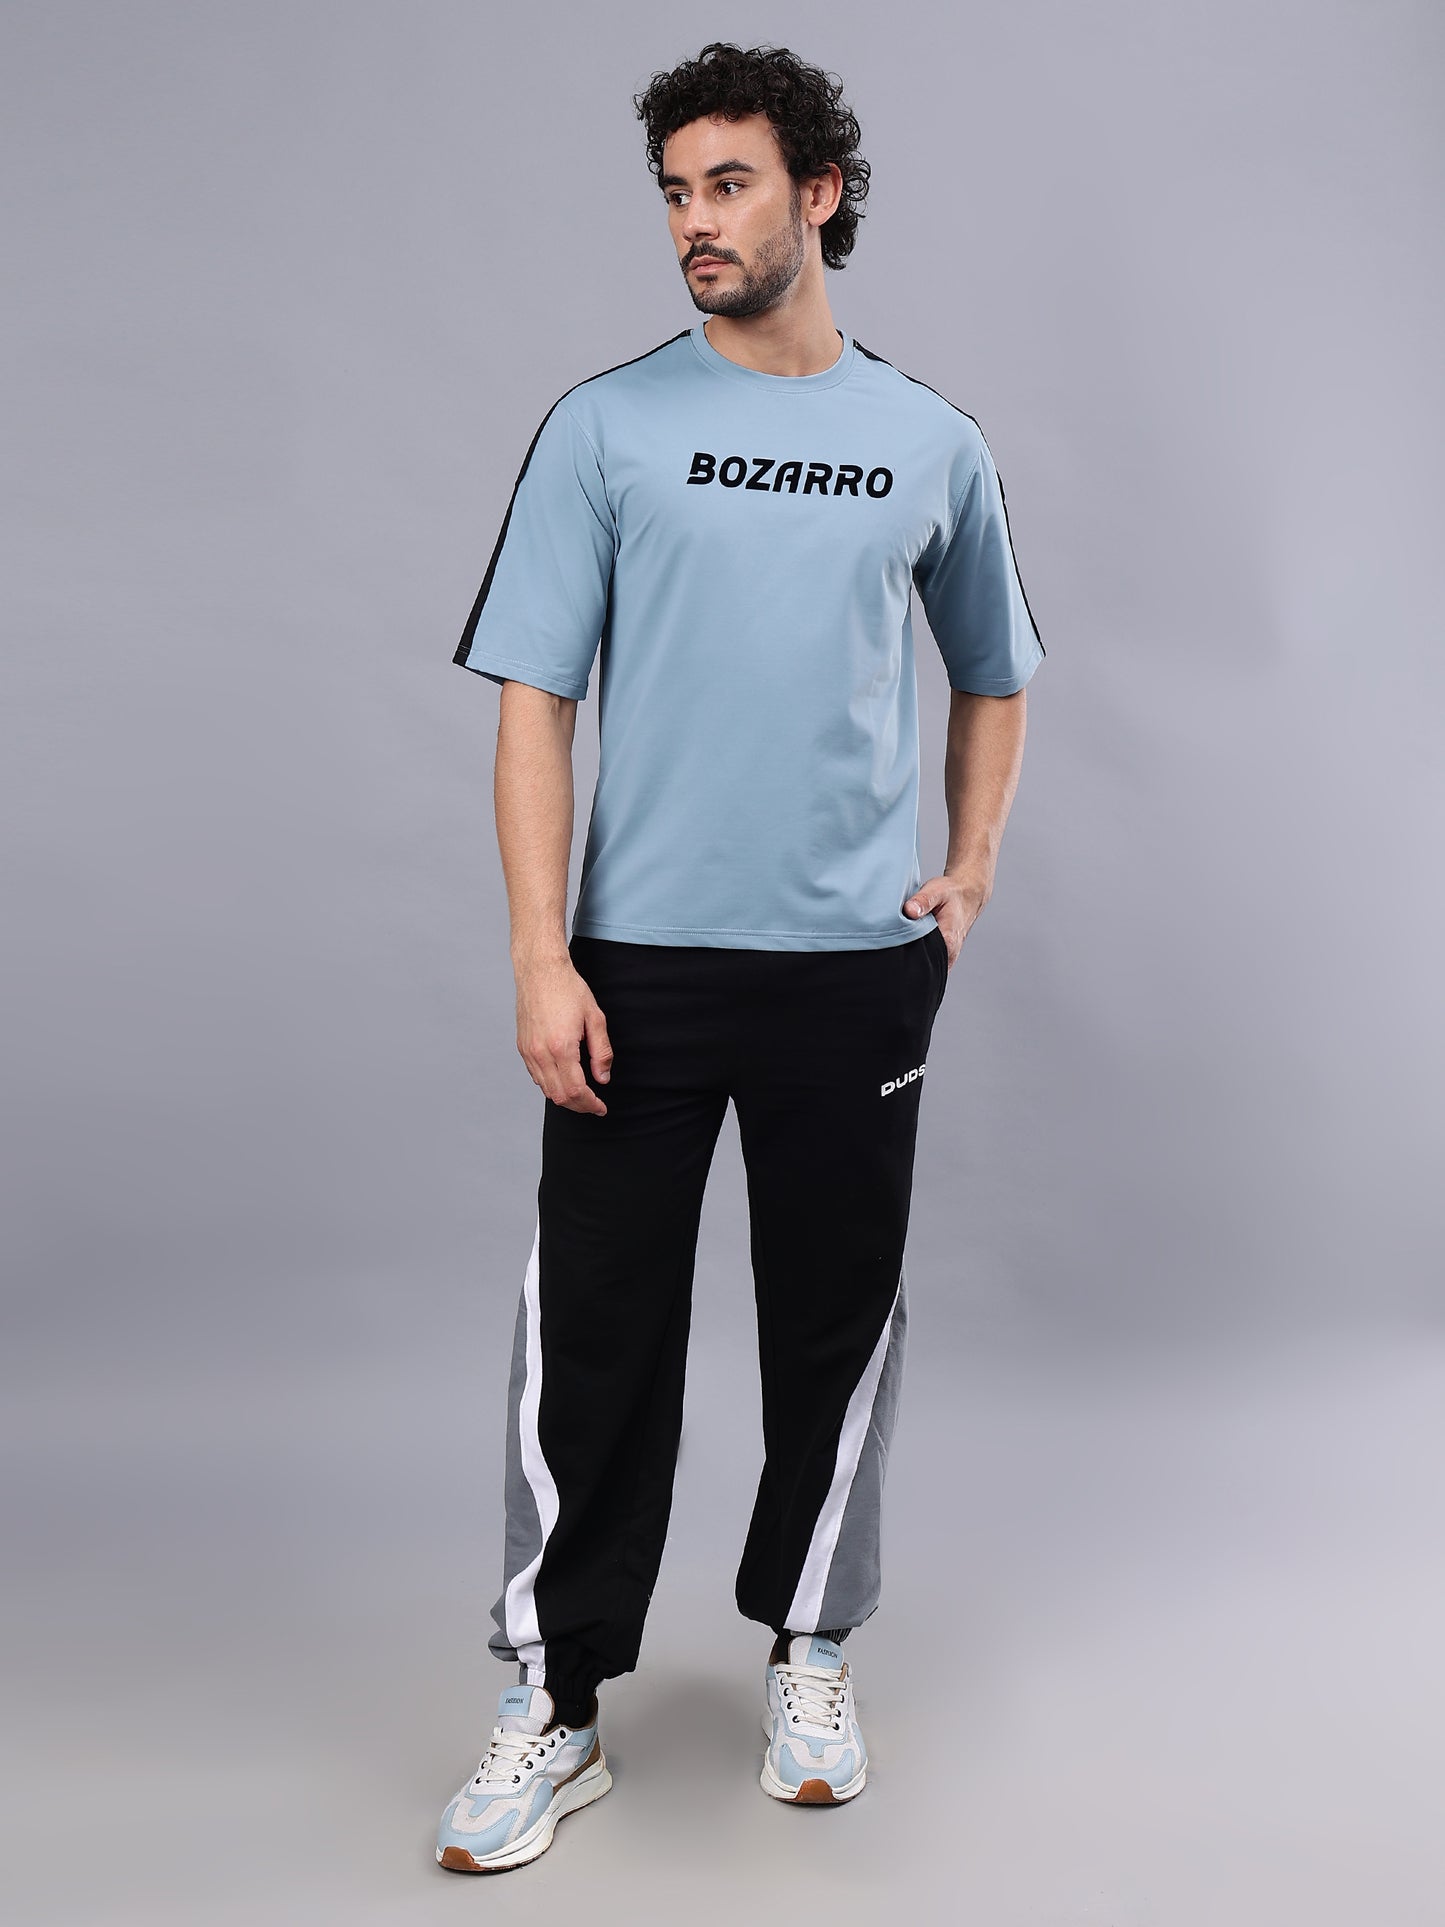 Round Neck Oversized Fit Drop Shoulder Half Sleeves T-Shirt for Men | Men's Printed Oversized T shirt-Sky Blue